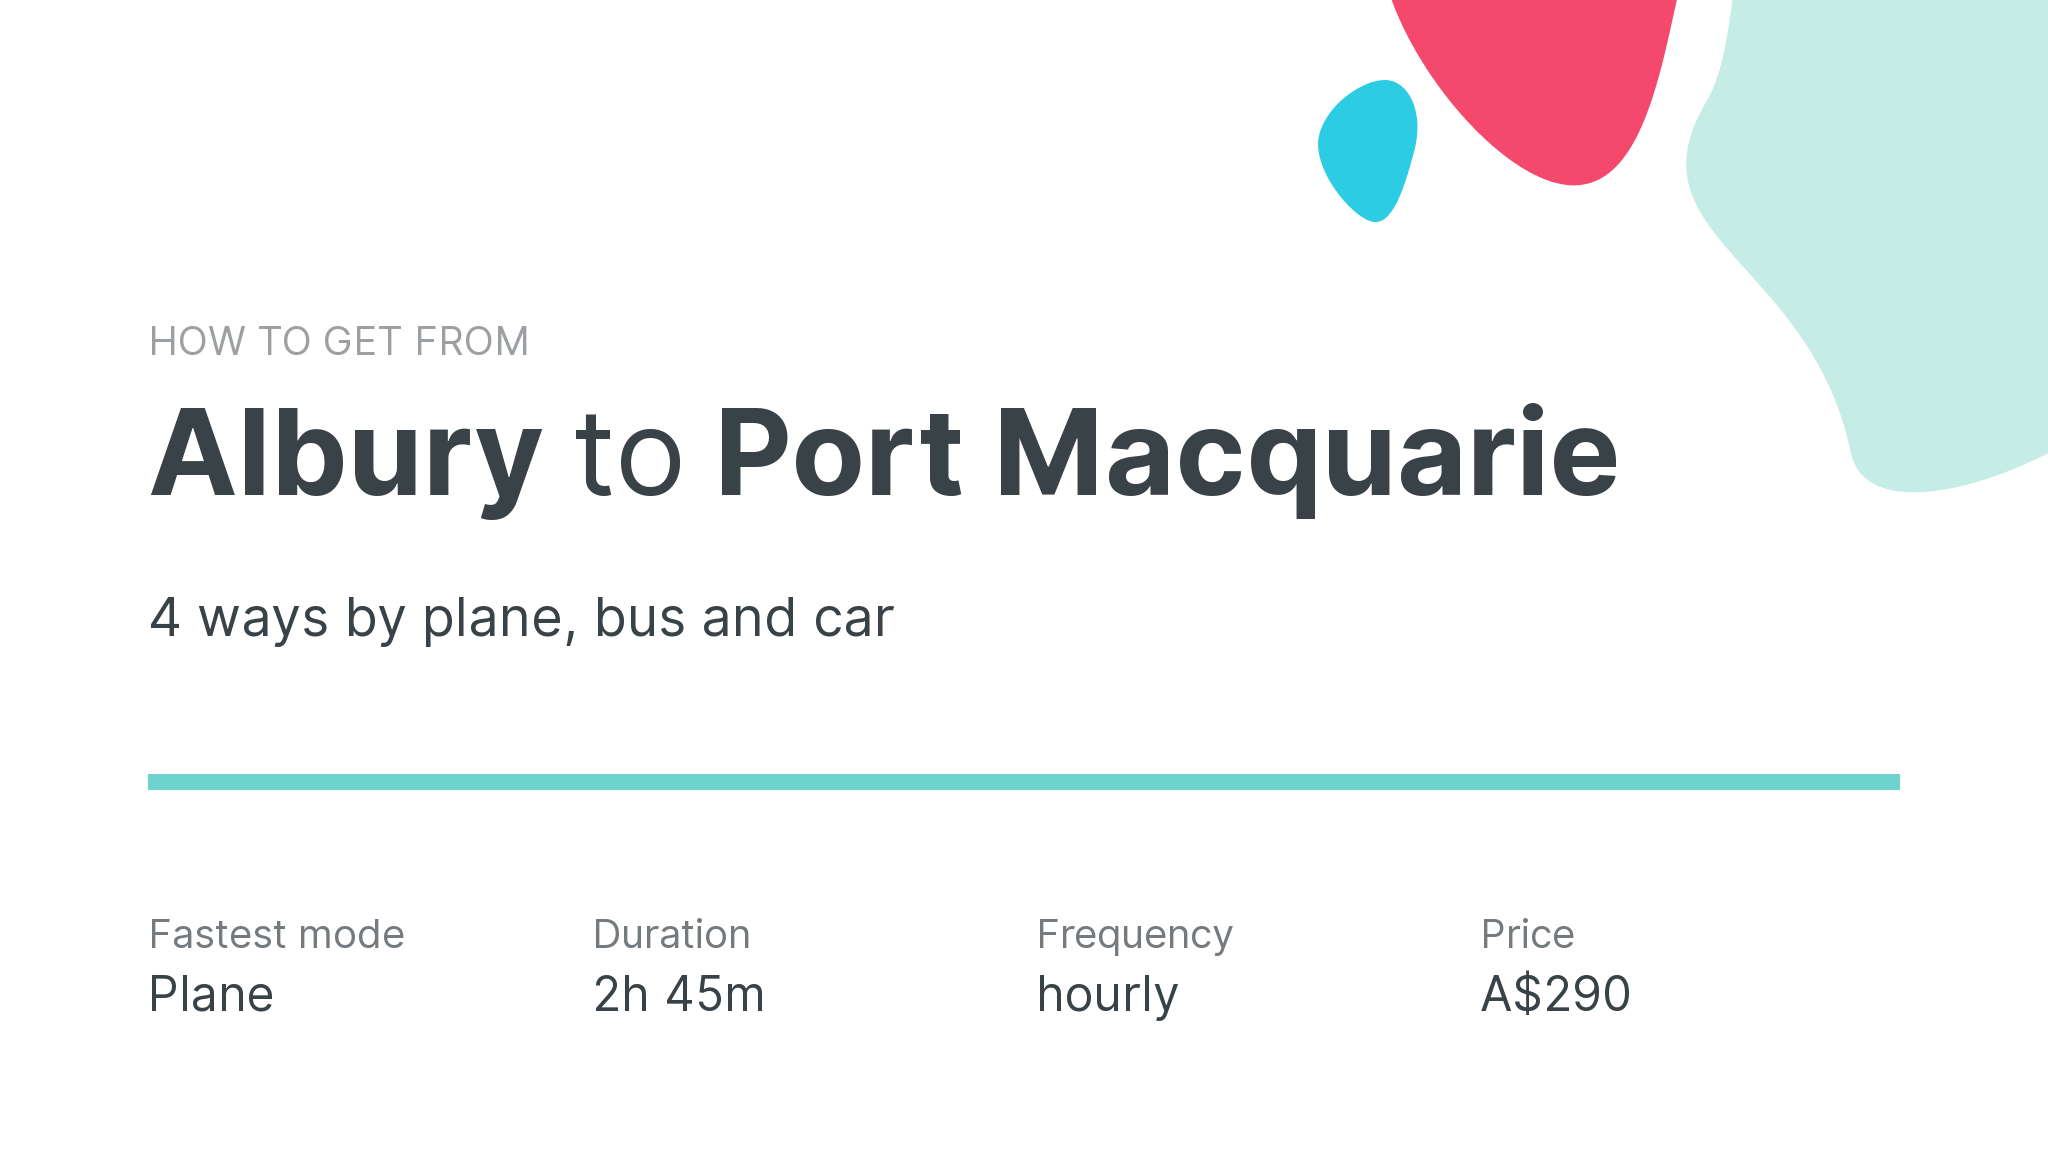 How do I get from Albury to Port Macquarie